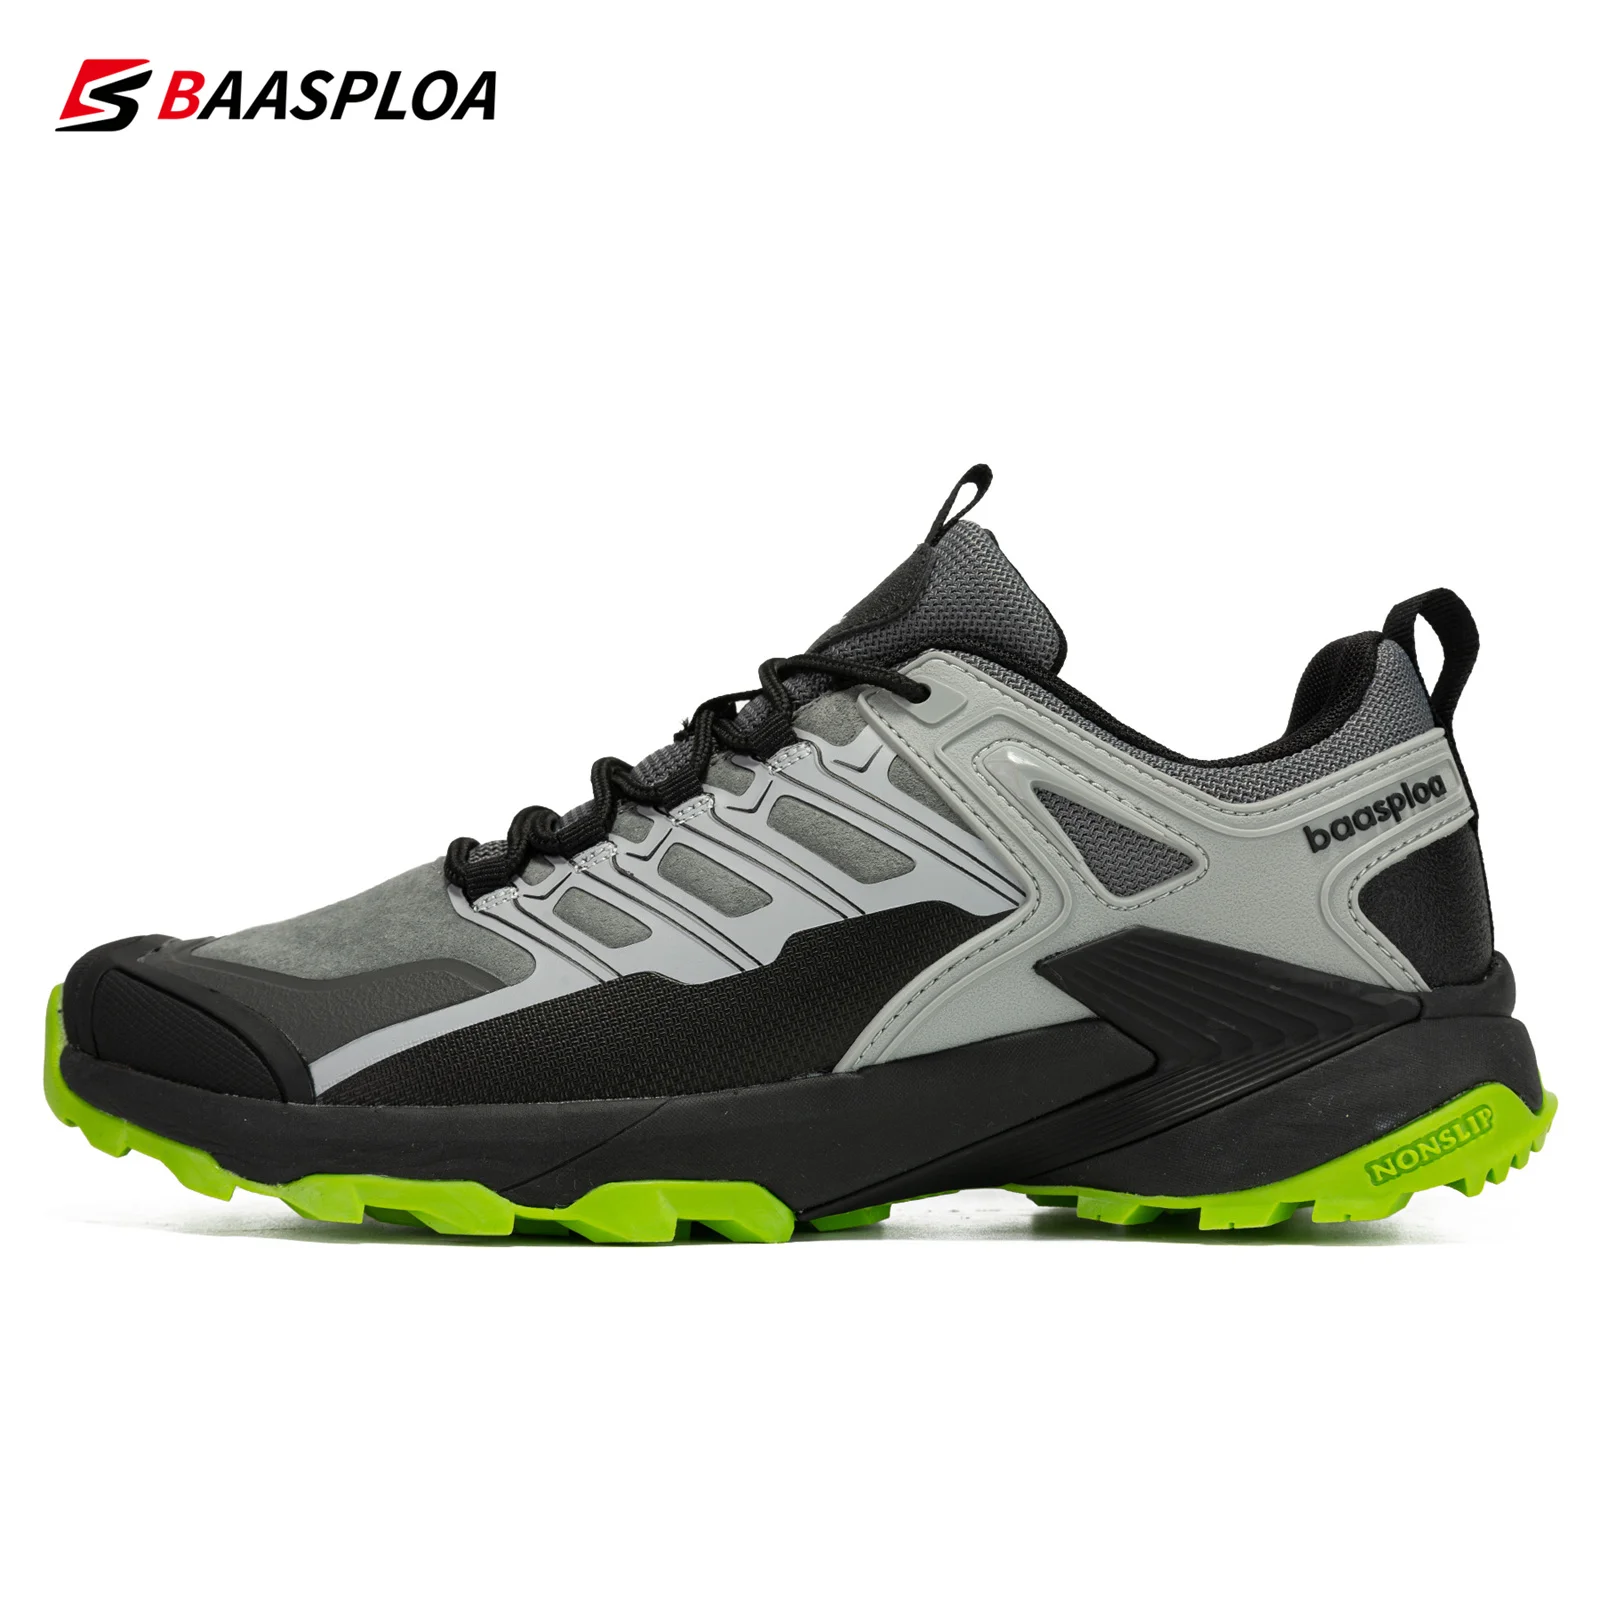  men s outdoor shoes wear resistant anti slip waterproof men s hiking shoes fashion new thumb200